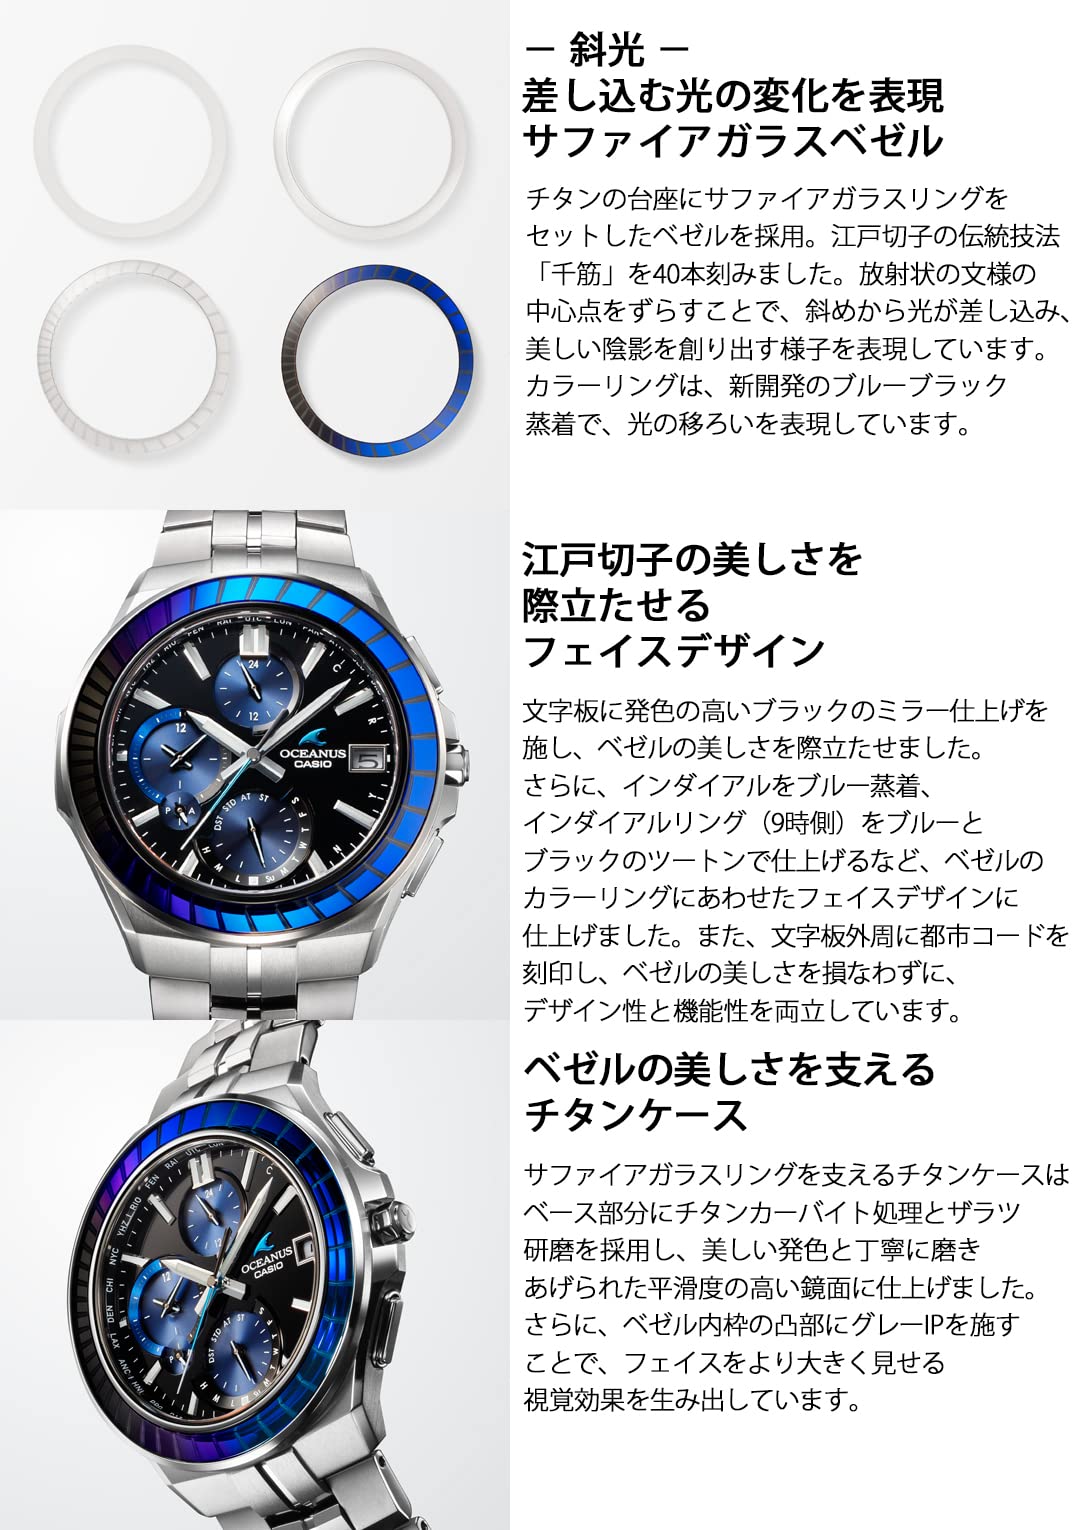 Casio OCW-S5000EK-1AJF [Oceanus Manta] Bluetooth Titanium Watch Shipped from Japan Released in June 2022